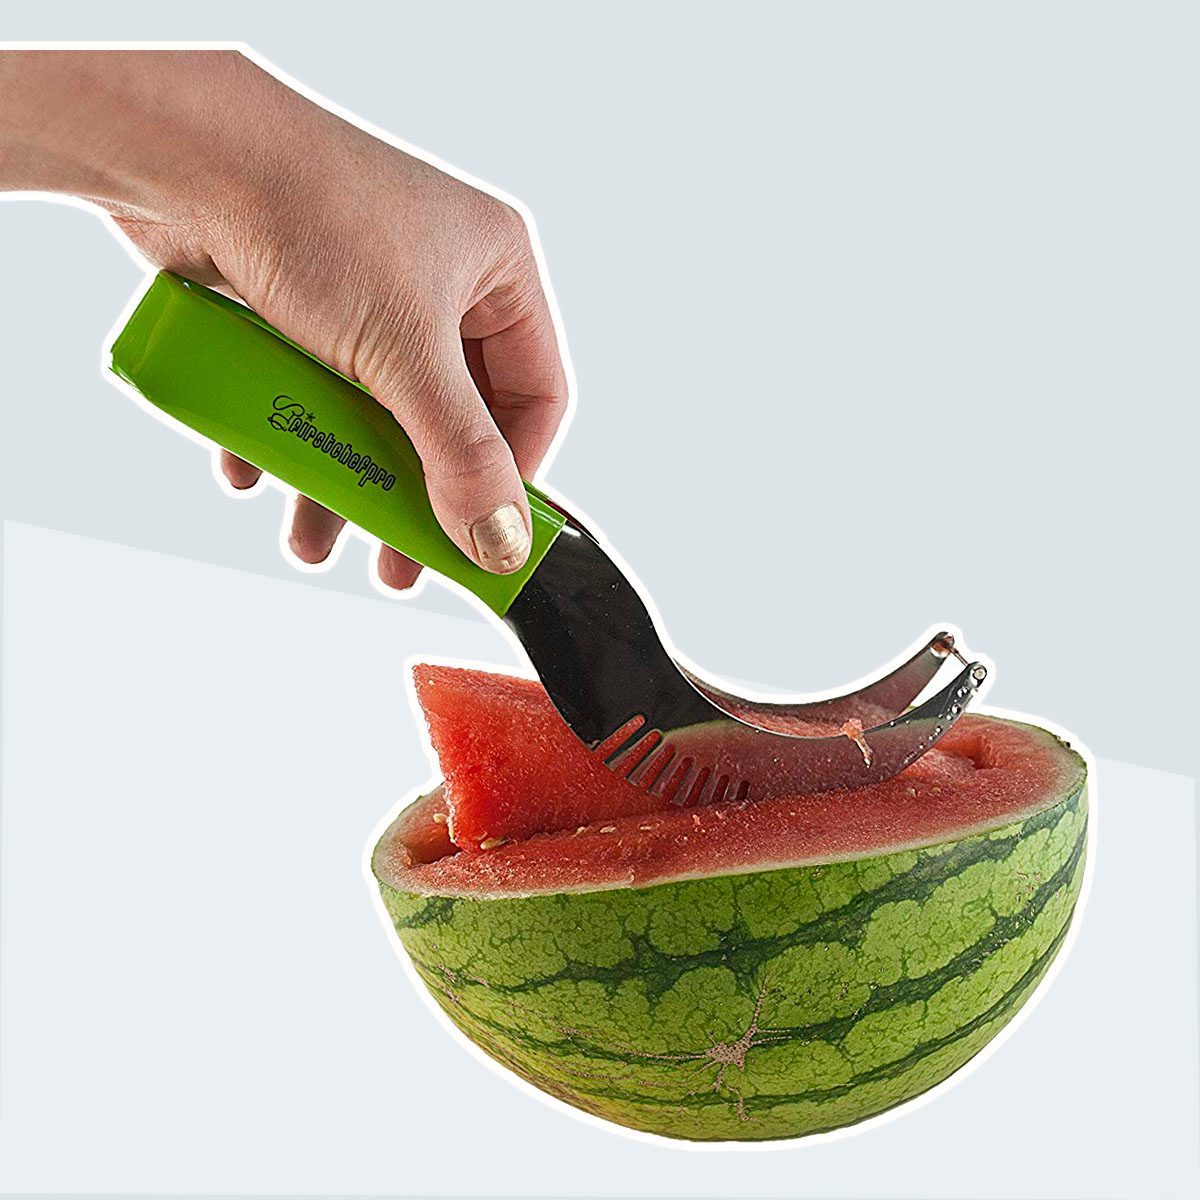 https://www.tasteofhome.com/wp-content/uploads/2018/08/Watermelon-Slicer.jpg?fit=700%2C700